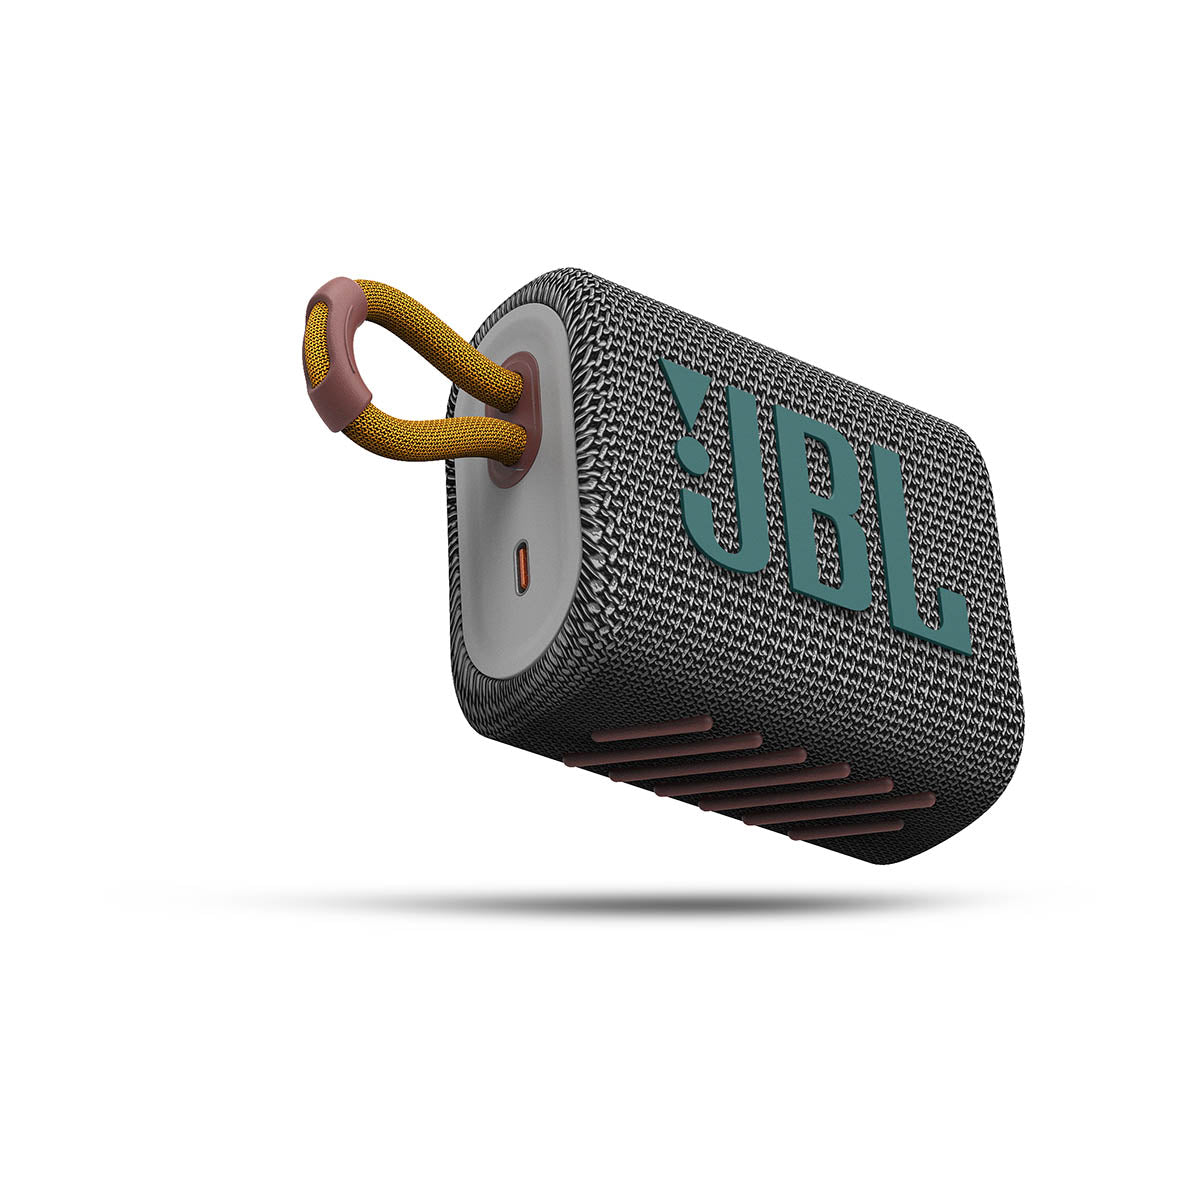 JBL Go 3 Portable Bluetooth Speaker - Gray